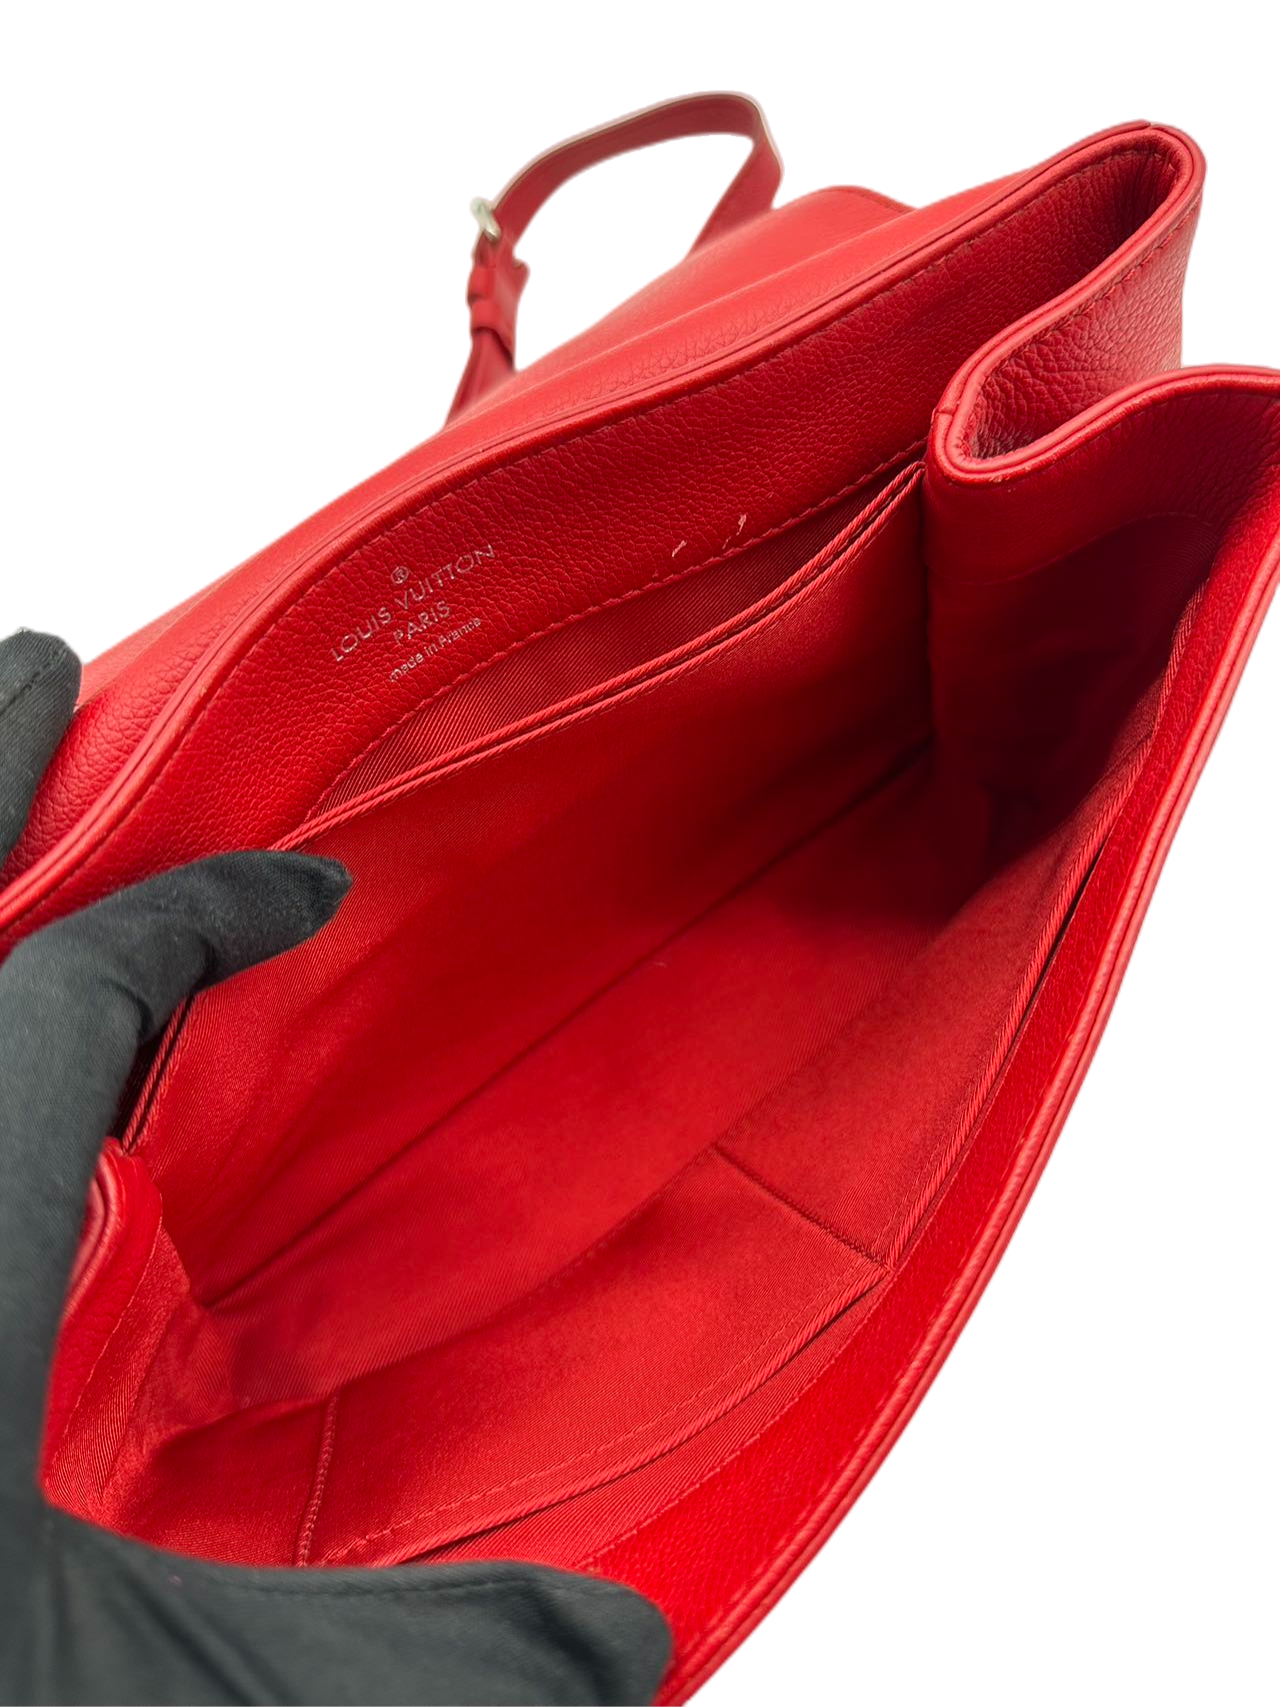 Preloved Louis Vuitton Red Leather Lockme Shoulder Bag Crossbody